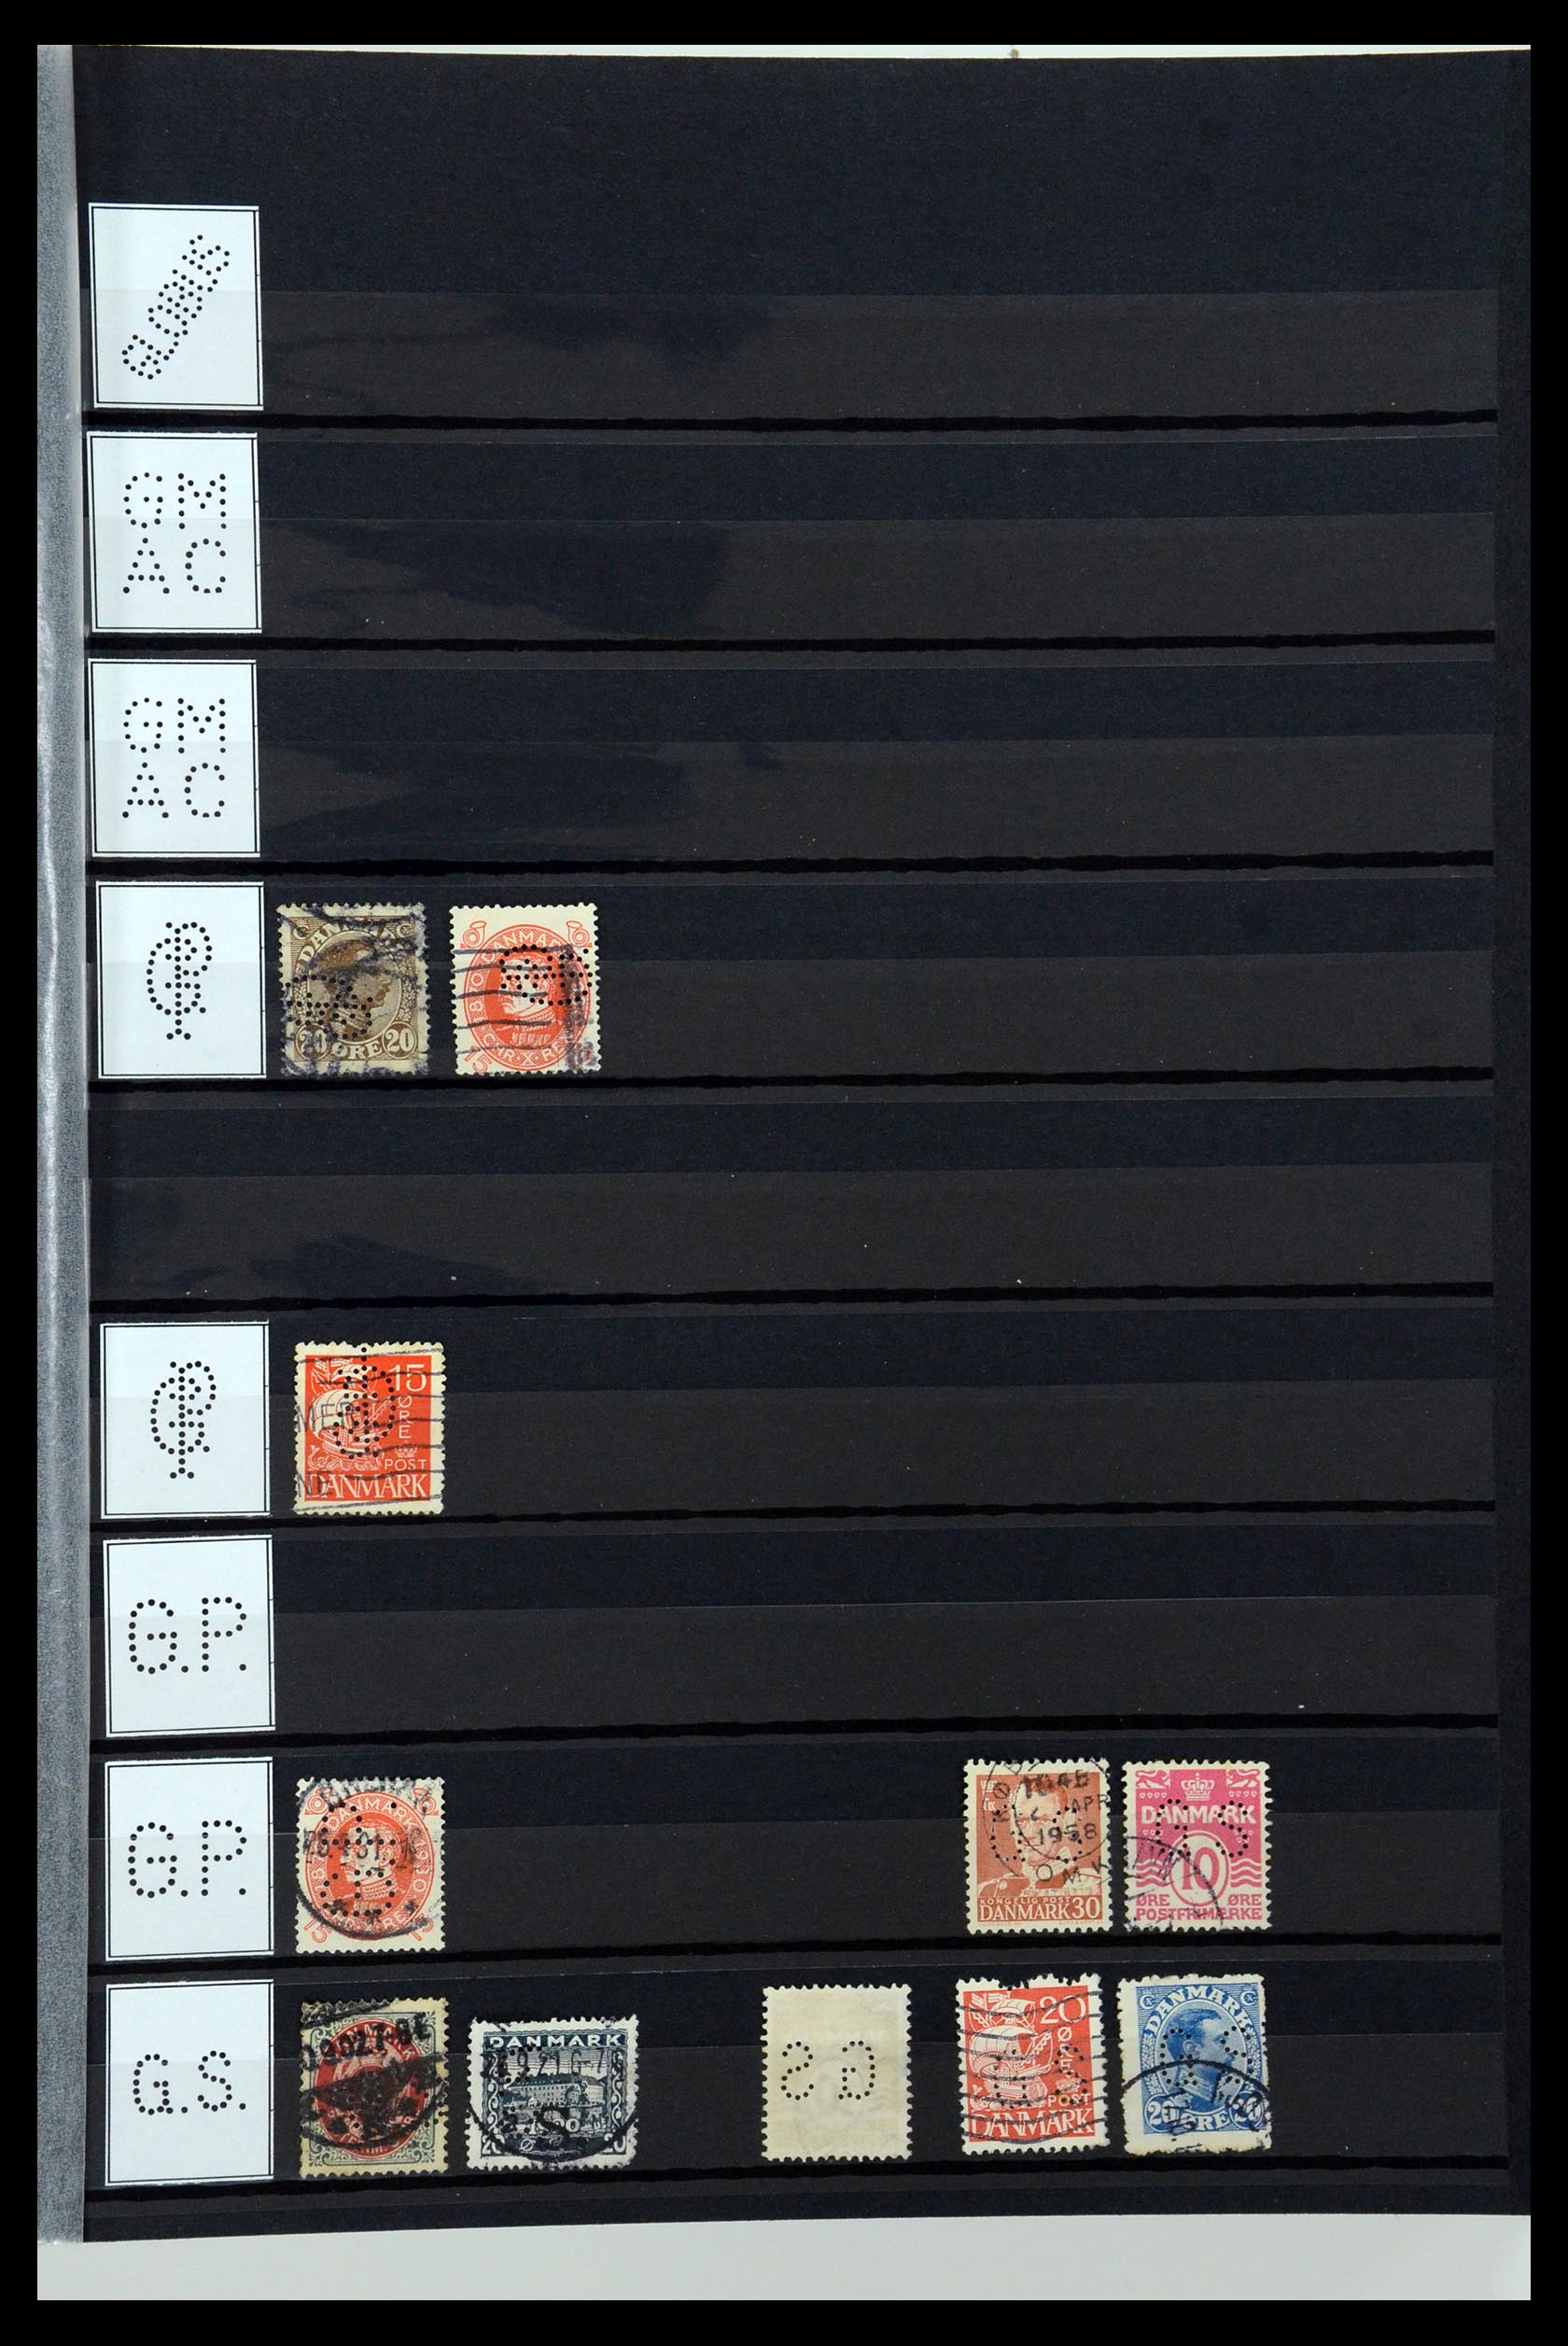 36396 120 - Stamp collection 36396 Denmark perfins.